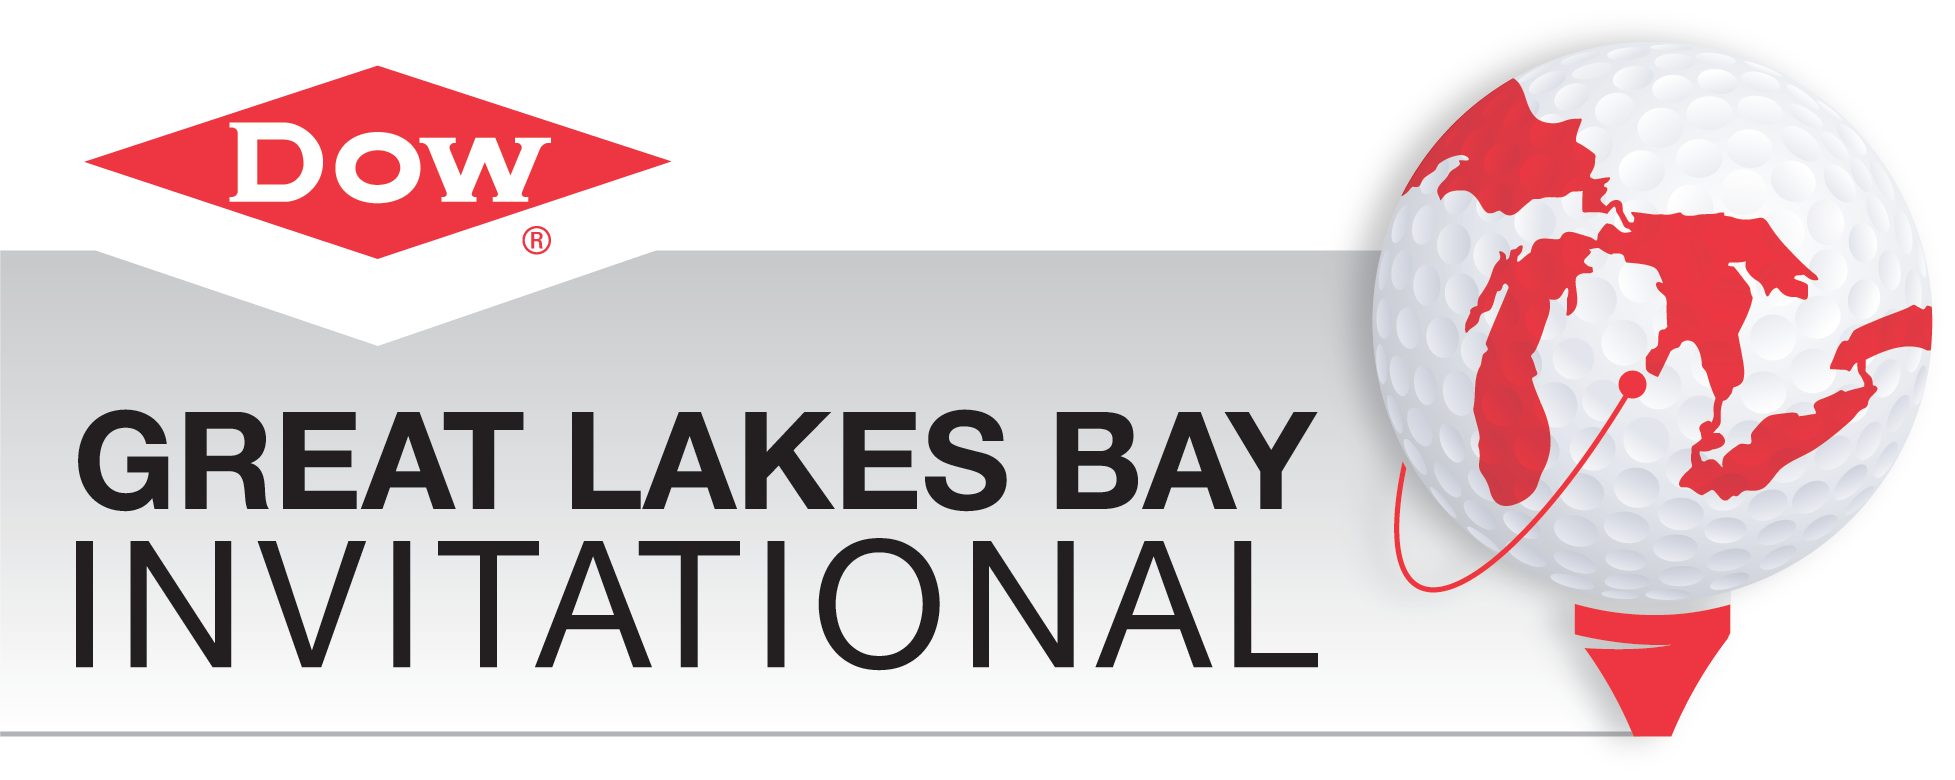 Dow Great Lakes Bay Invitational วันที่ 1